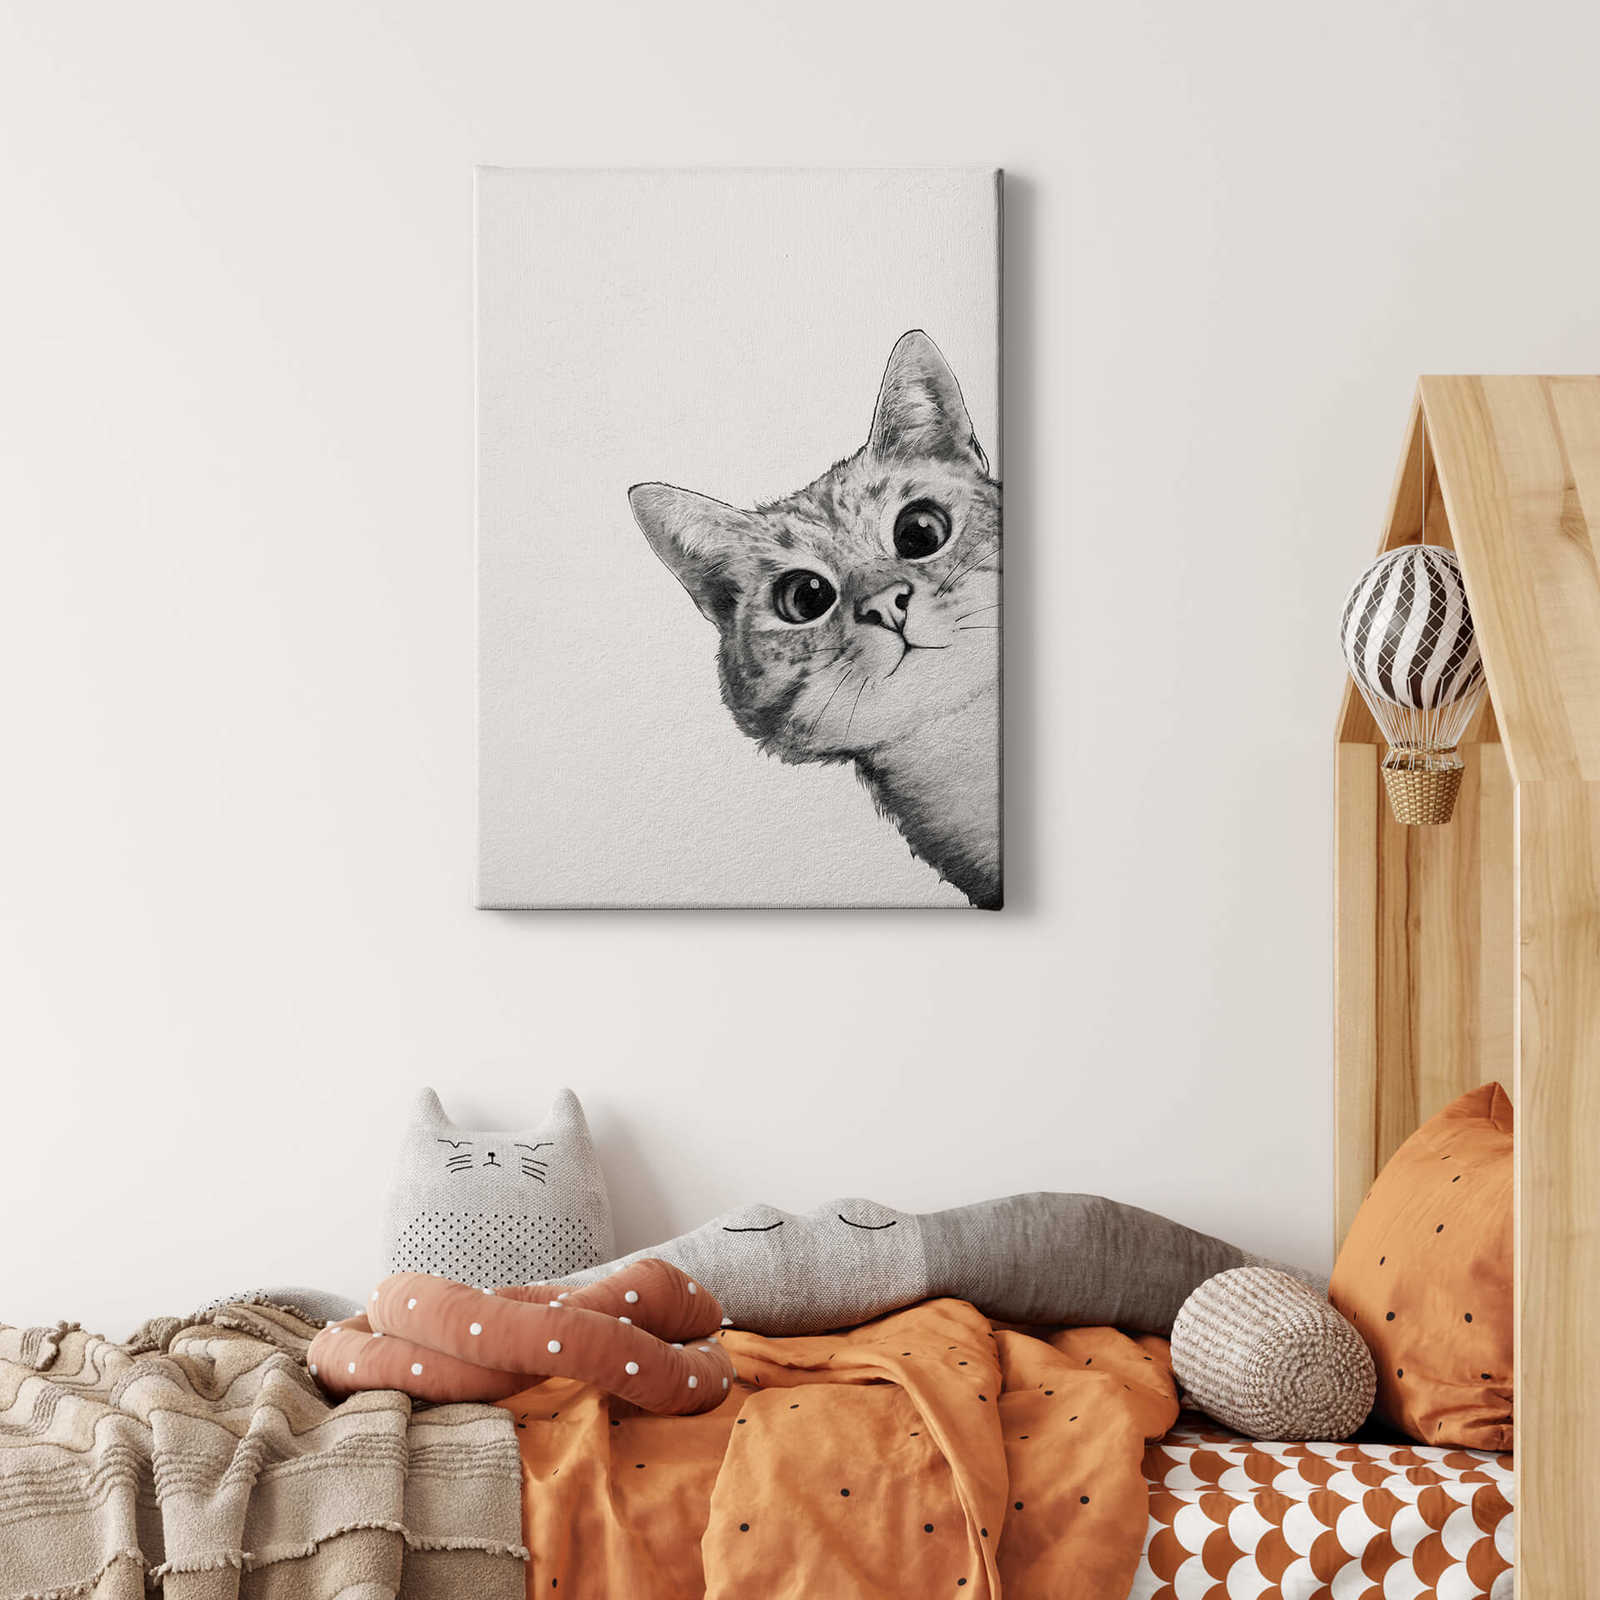             Cuadro en lienzo "Sneaky Cat" de Graves, gato en blanco y negro - 0,50 m x 0,70 m
        